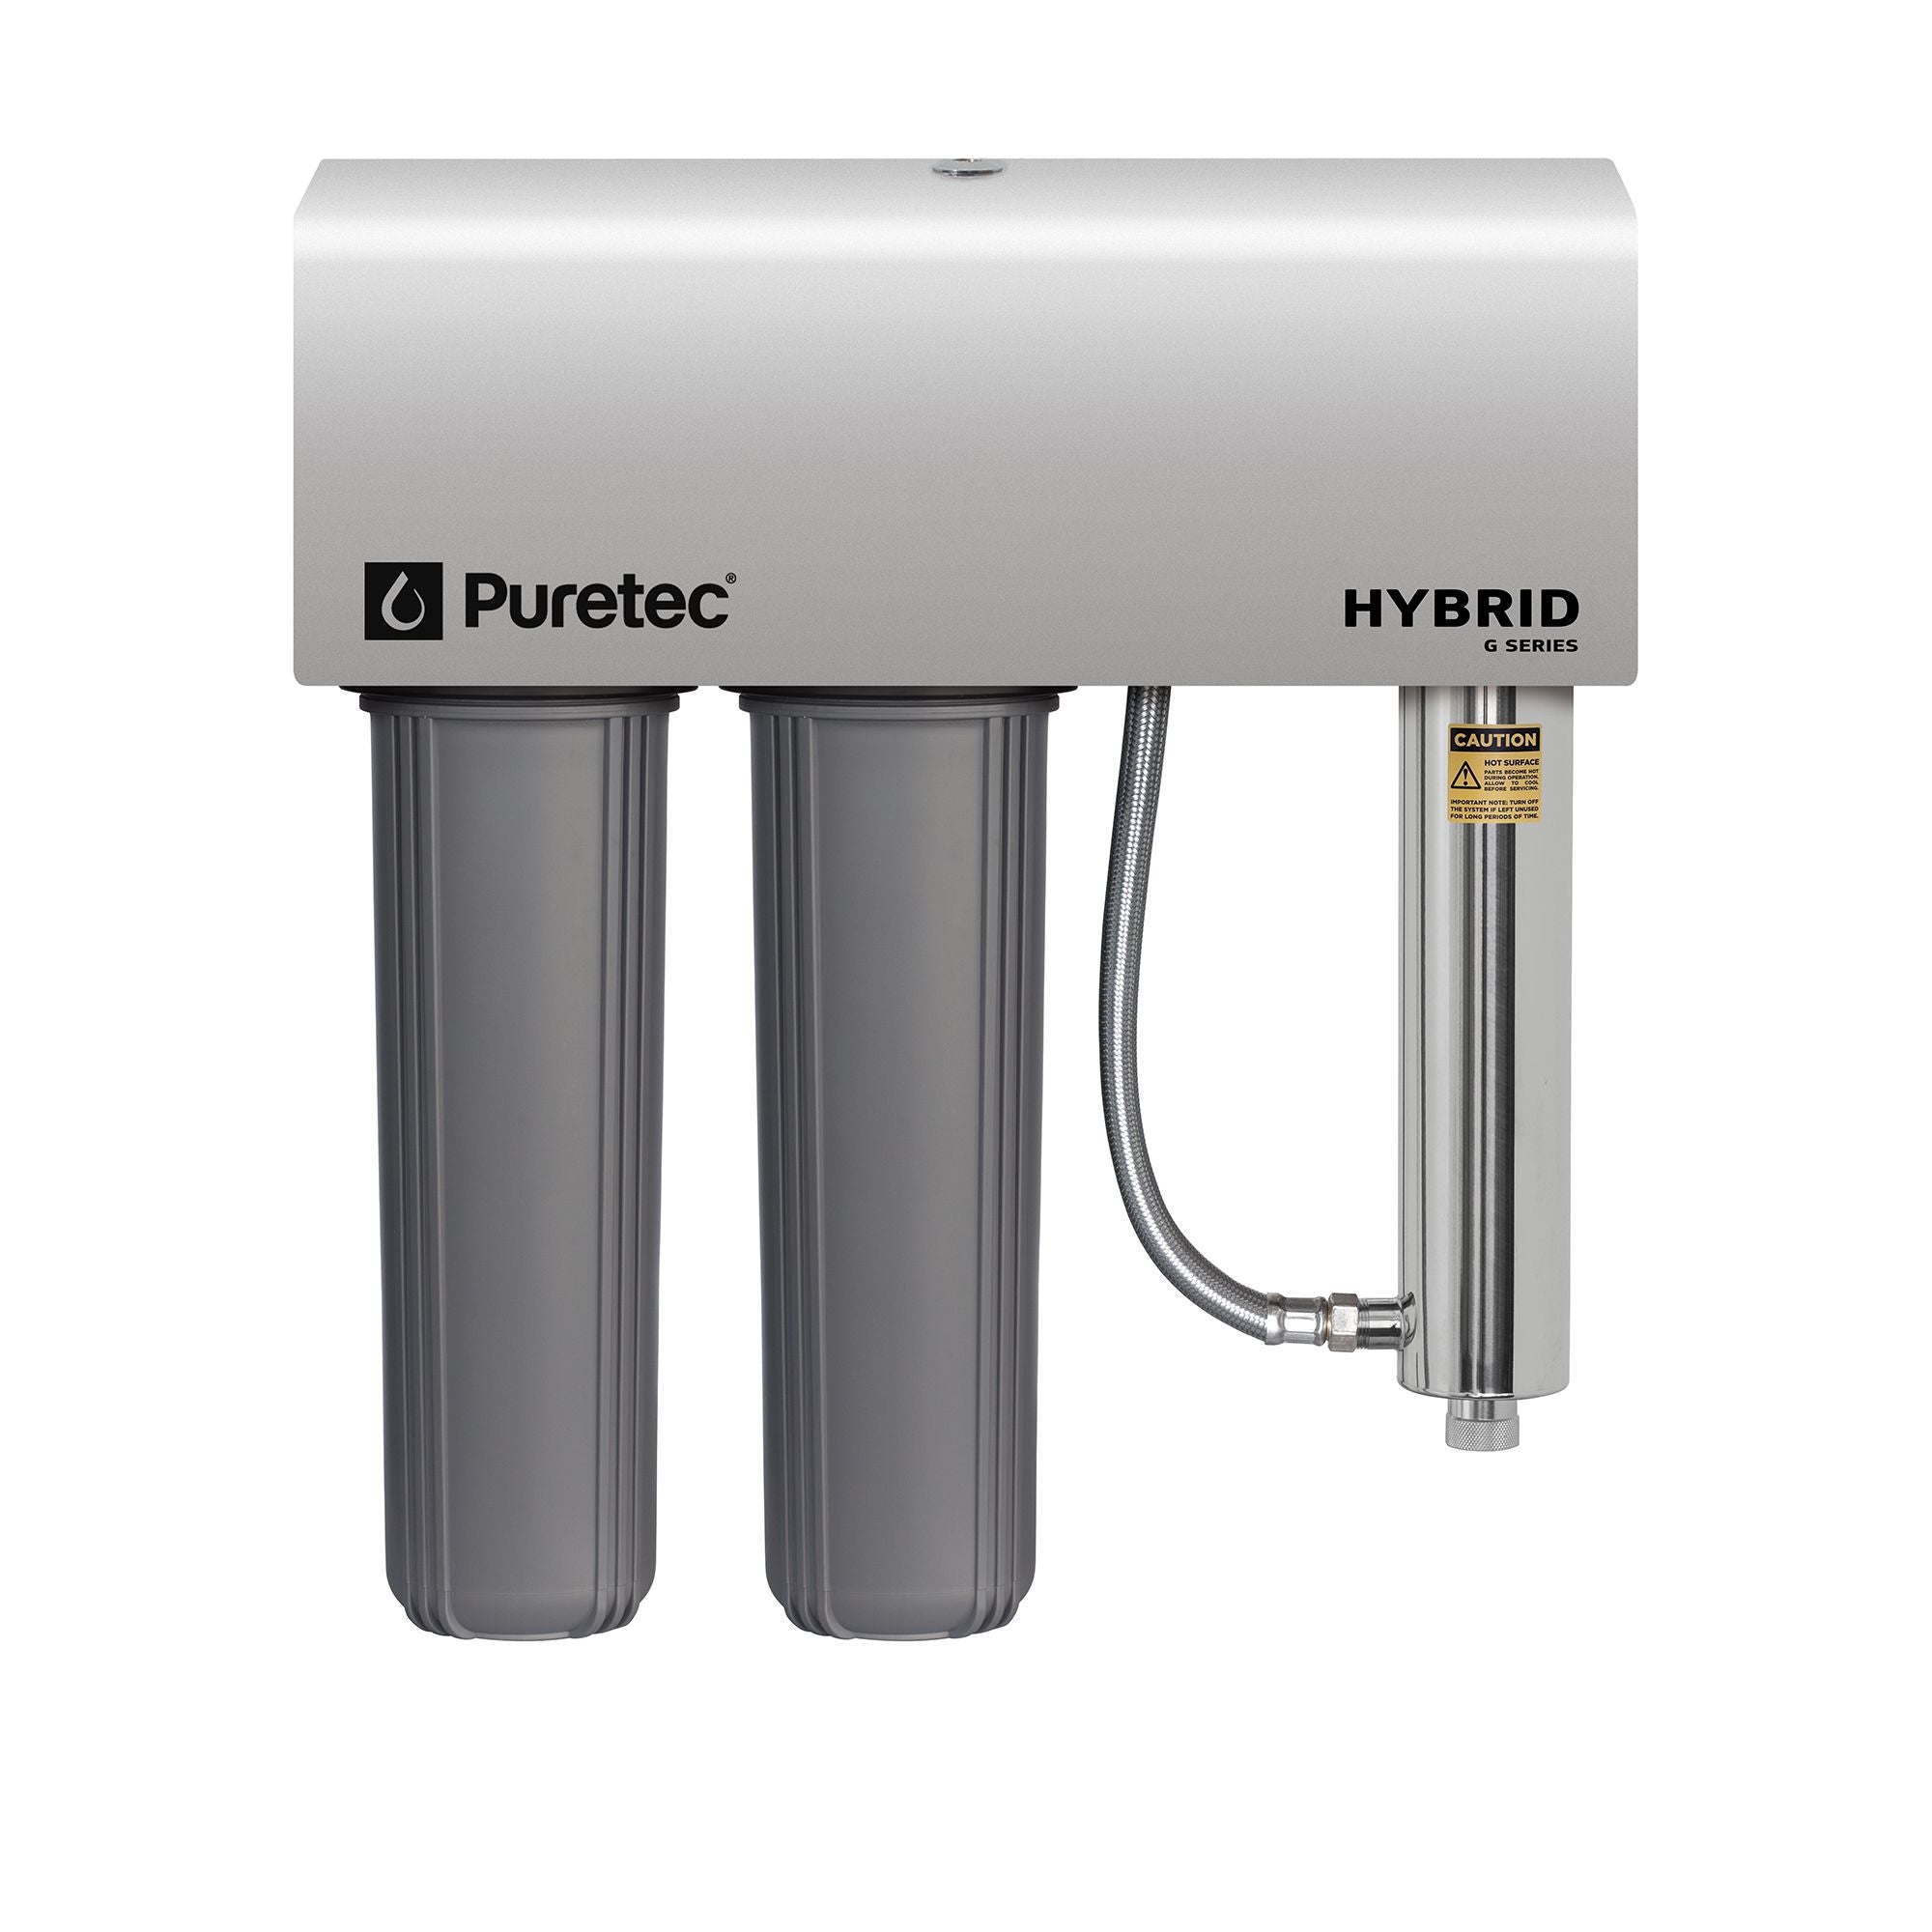 Puretec Hybrid G7 High Flow Uv Treatment System